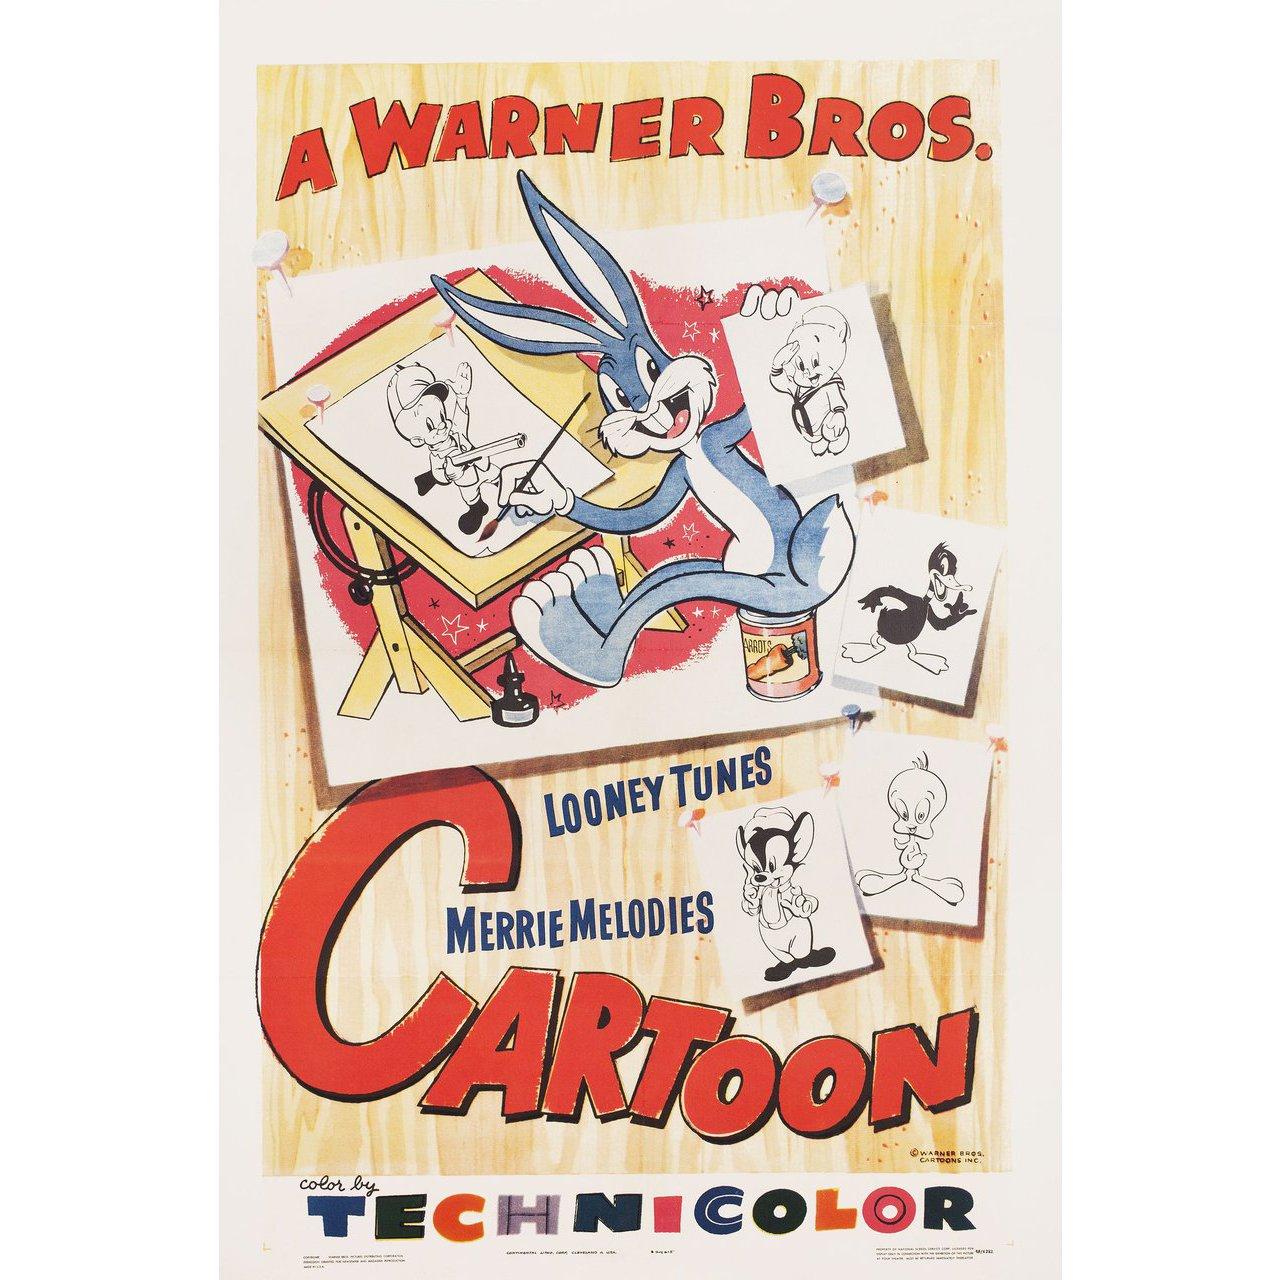 Warner Bros Cartoon 1948 U.S. One Sheet Film Poster